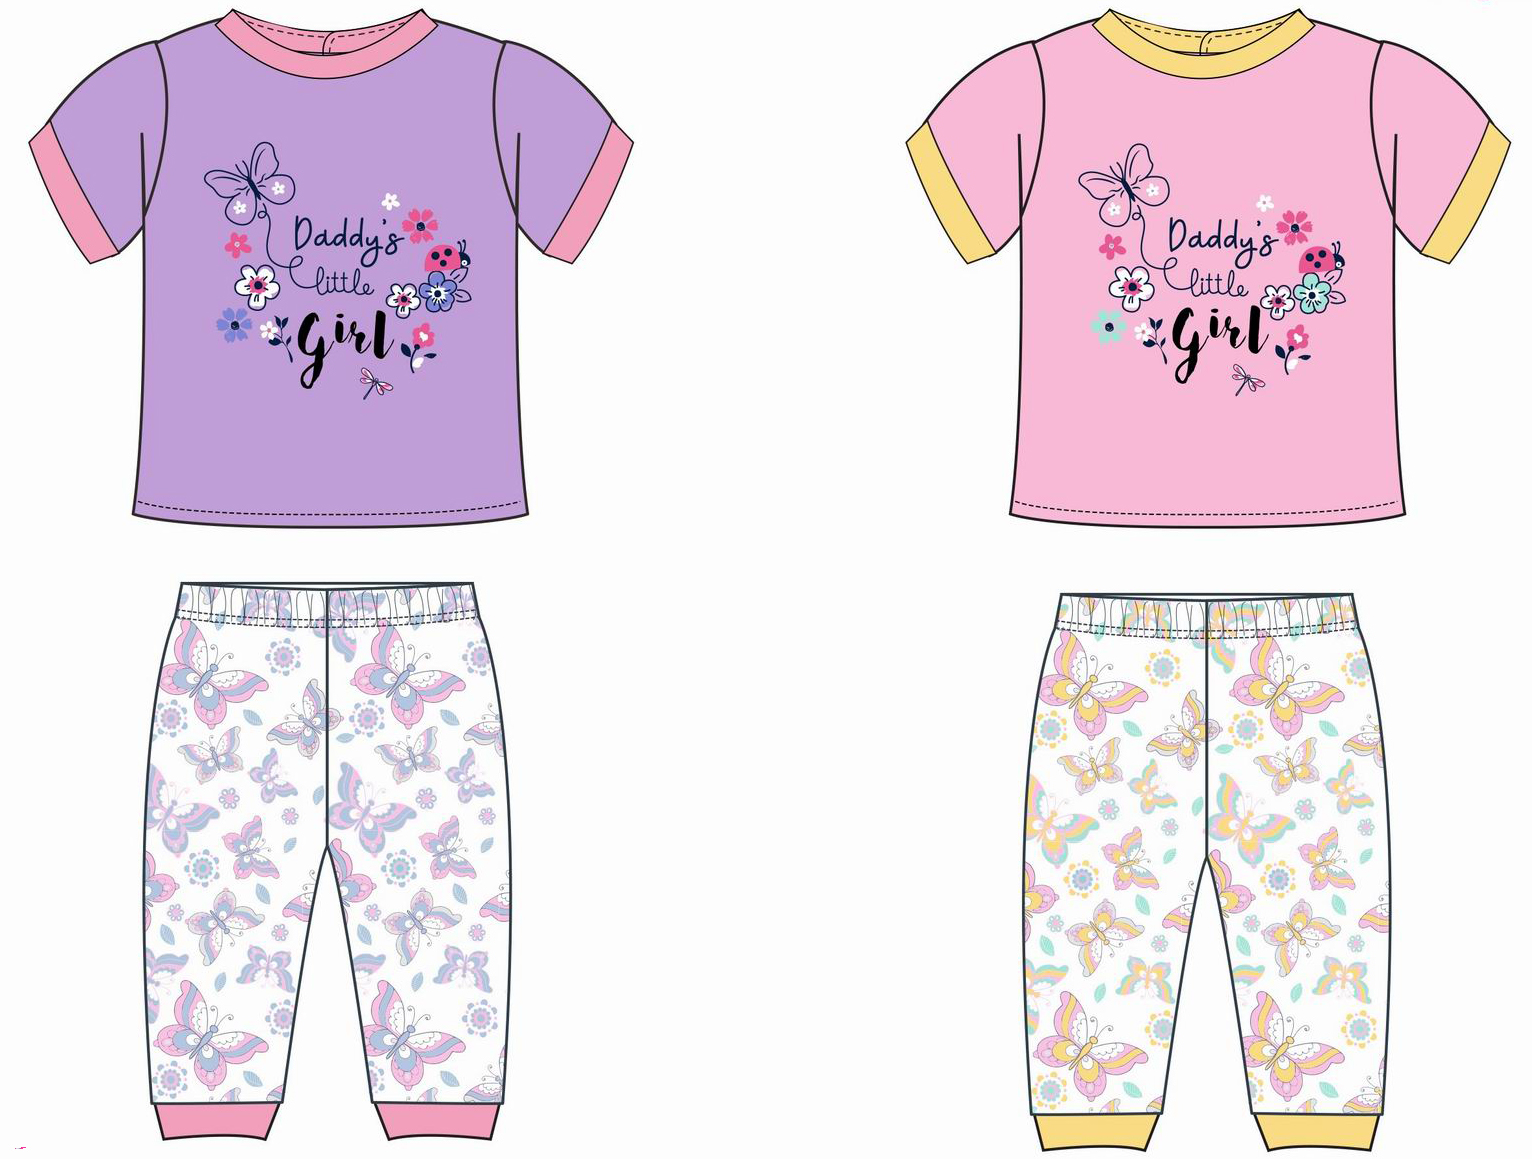 Baby Girl's 2 PC. Short-Sleeve Rib PAJAMAS Sets w/ Daddy's Little Girl Print - Sizes 12M-24M